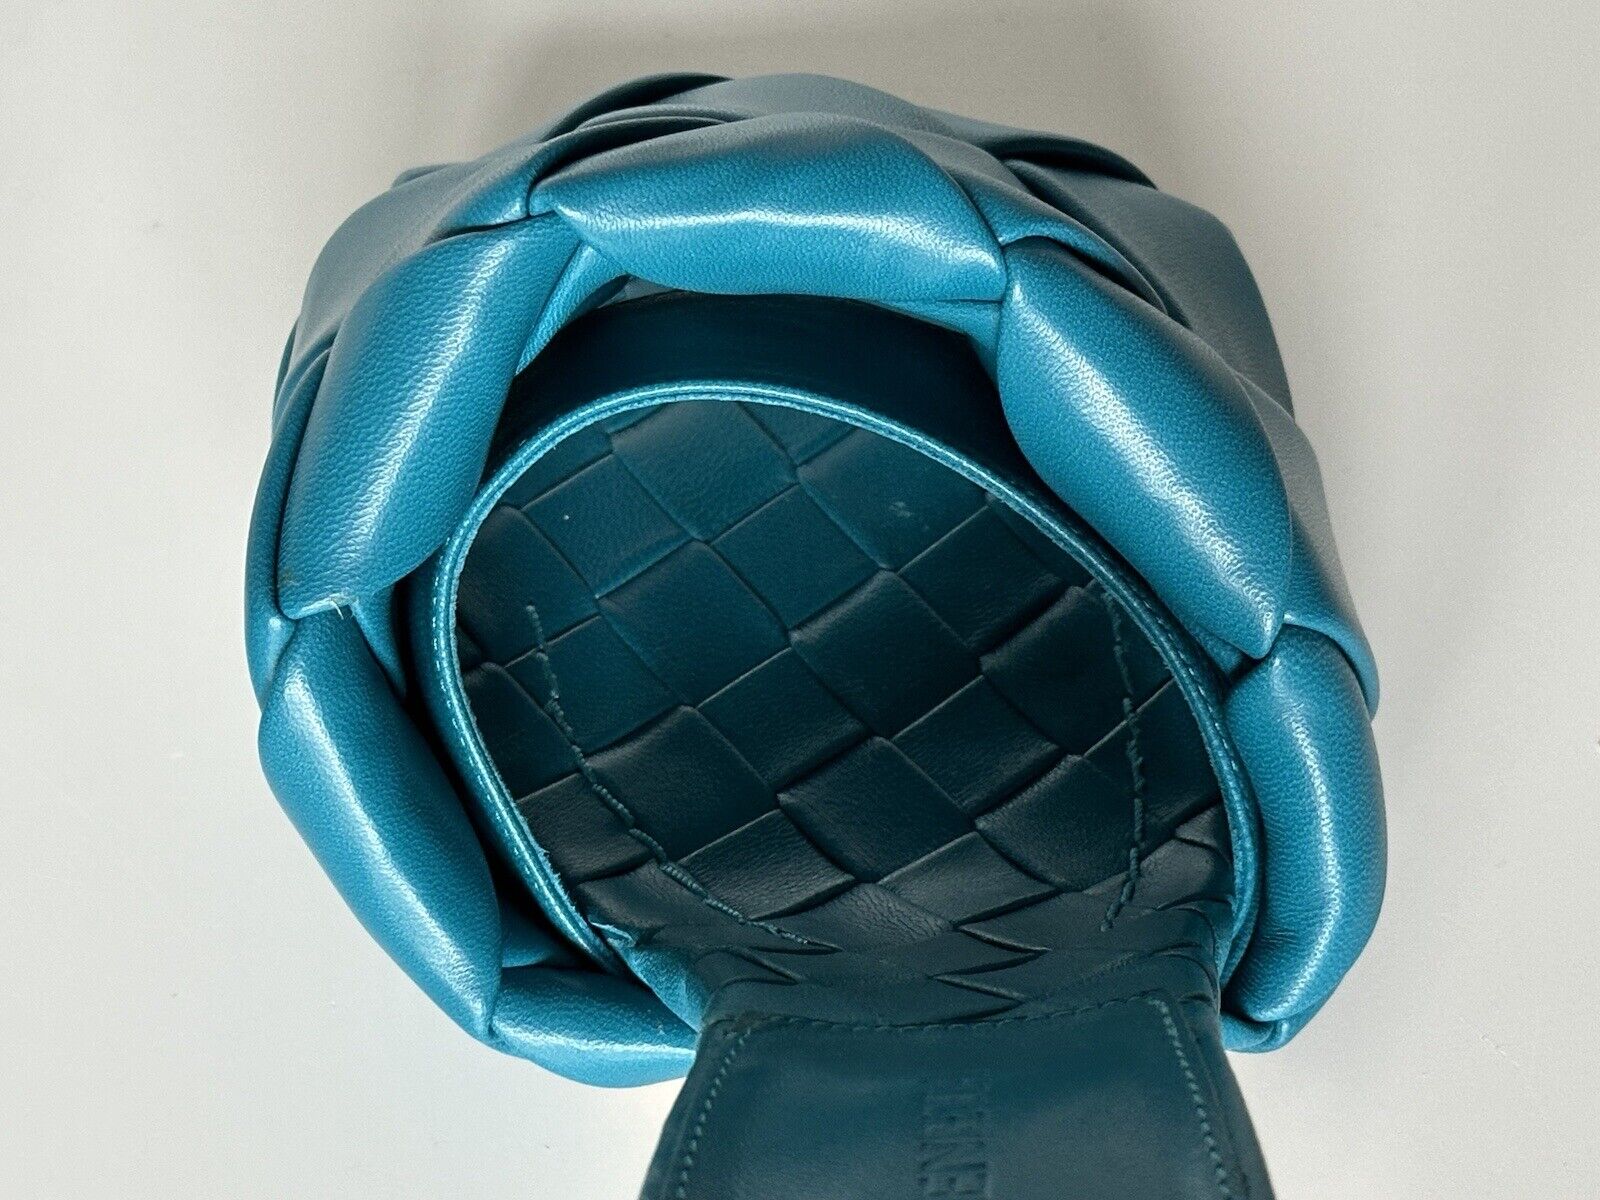 Neu mit Etikett: 1.500 $ Bottega Veneta Lido Intrecciato-Leder-Pantoletten Vintage Blue 8 US 608854 